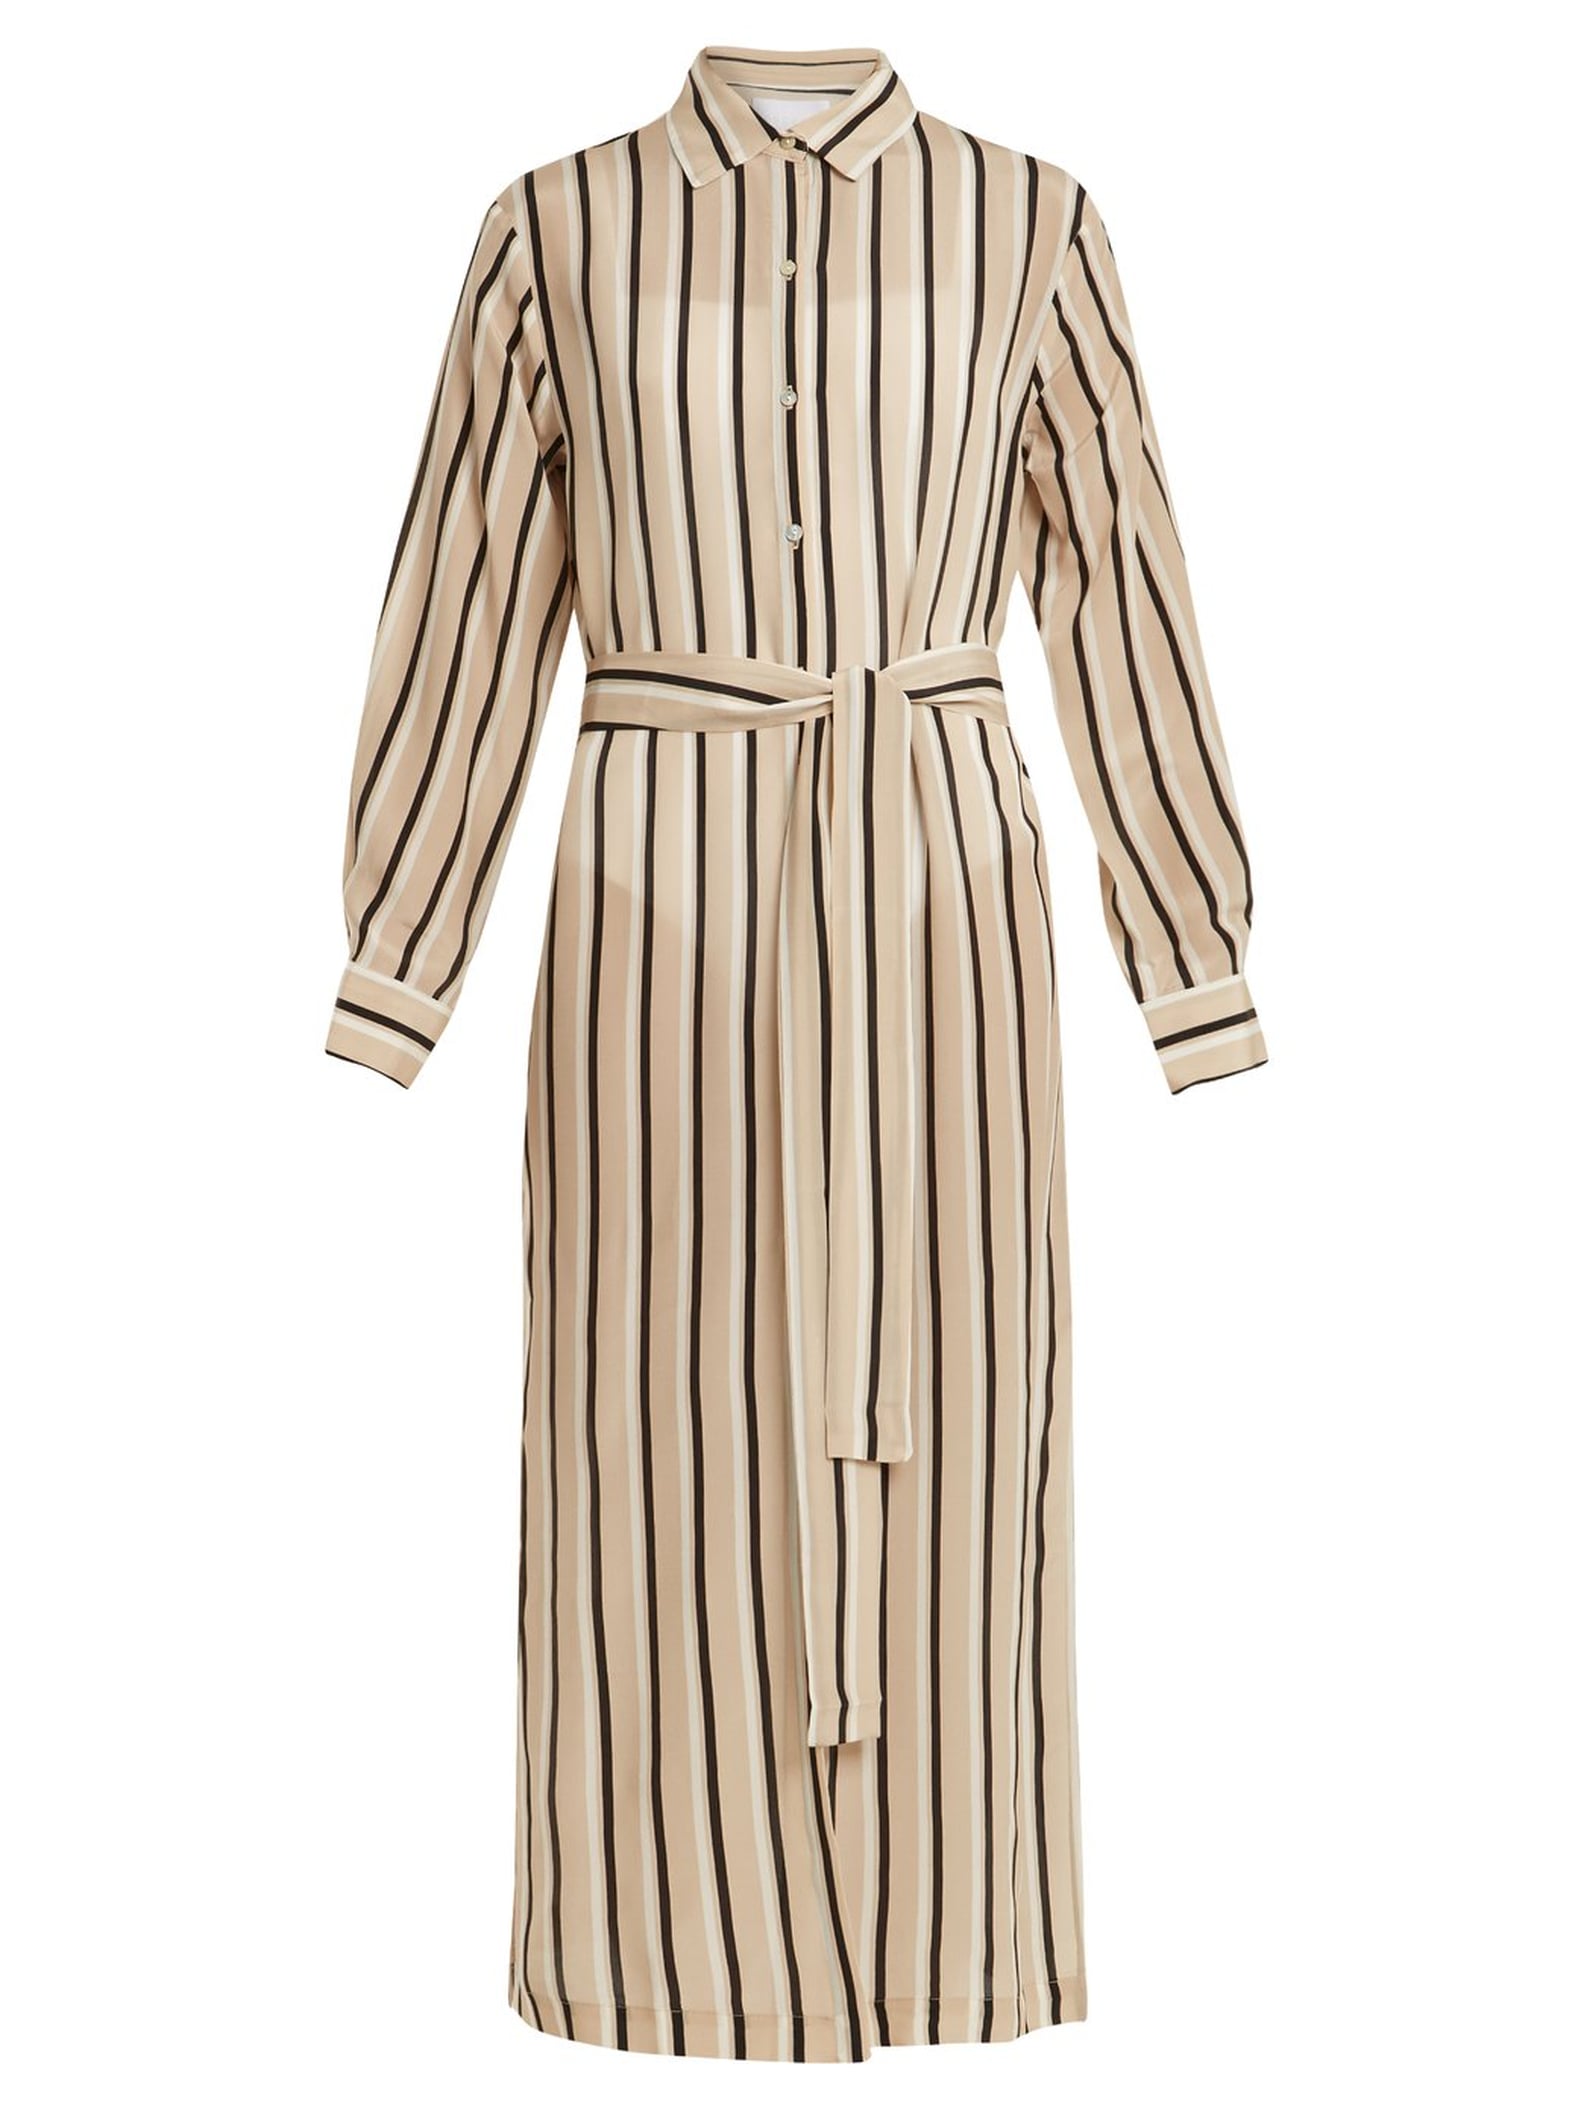 Melania Trump's Adam Lippes Striped Dress | POPSUGAR Fashion